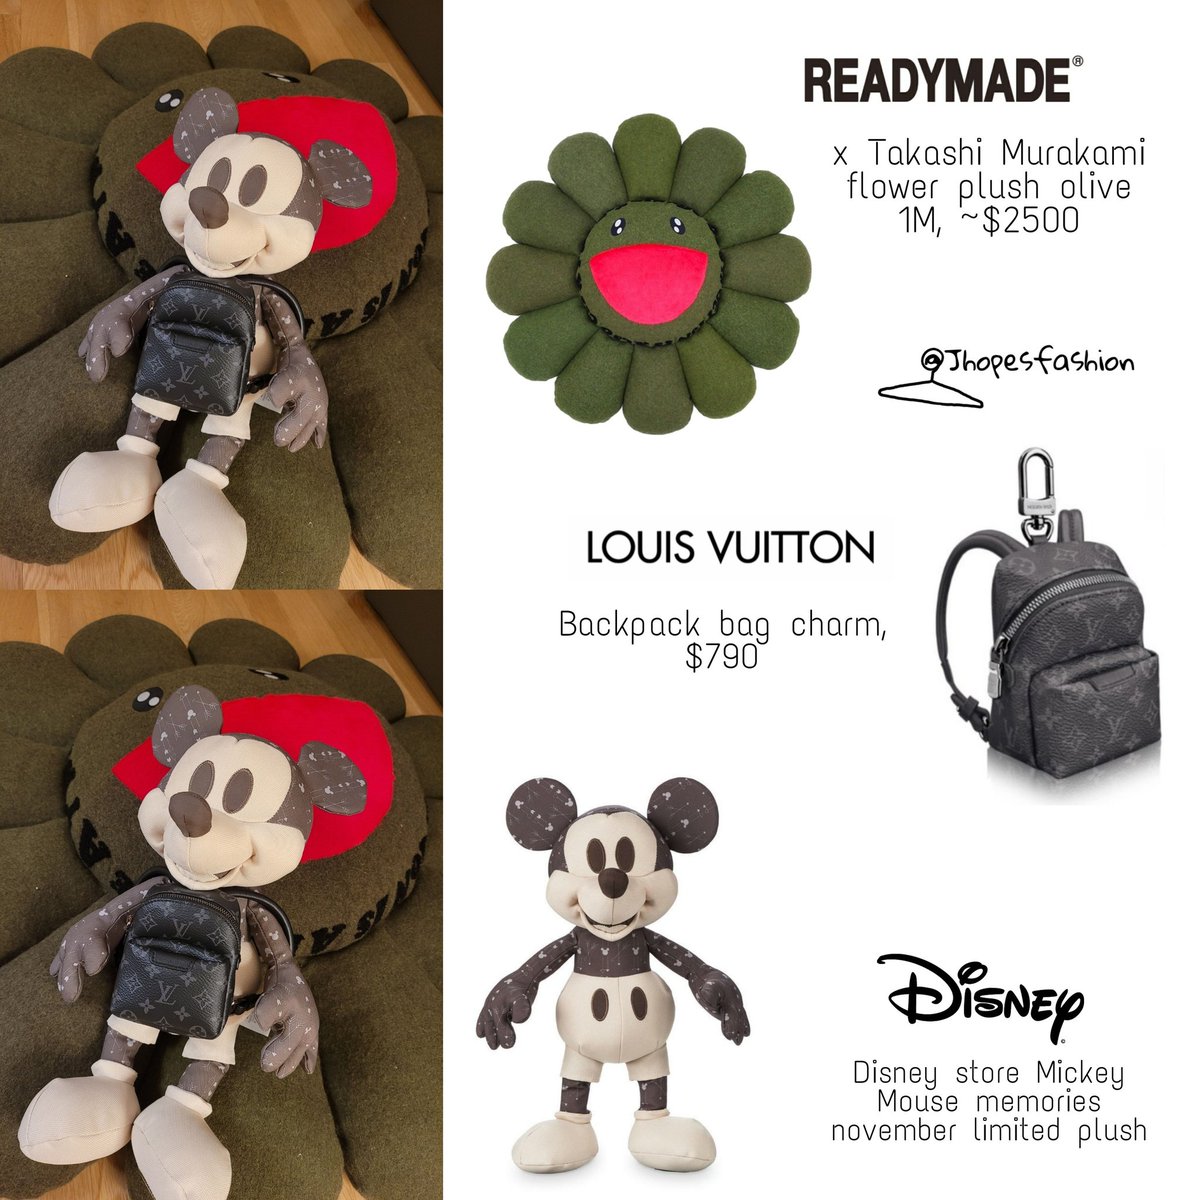 j-hope's closet (rest) on X: J-hope's Readymade x Takashi Murakami flower  plush, Louis Vuitton bag charm and Disney Mickey Mouse plush 201004 -  Weverse post #Jhope #제이홉 #Jhopefashion #BTS  / X